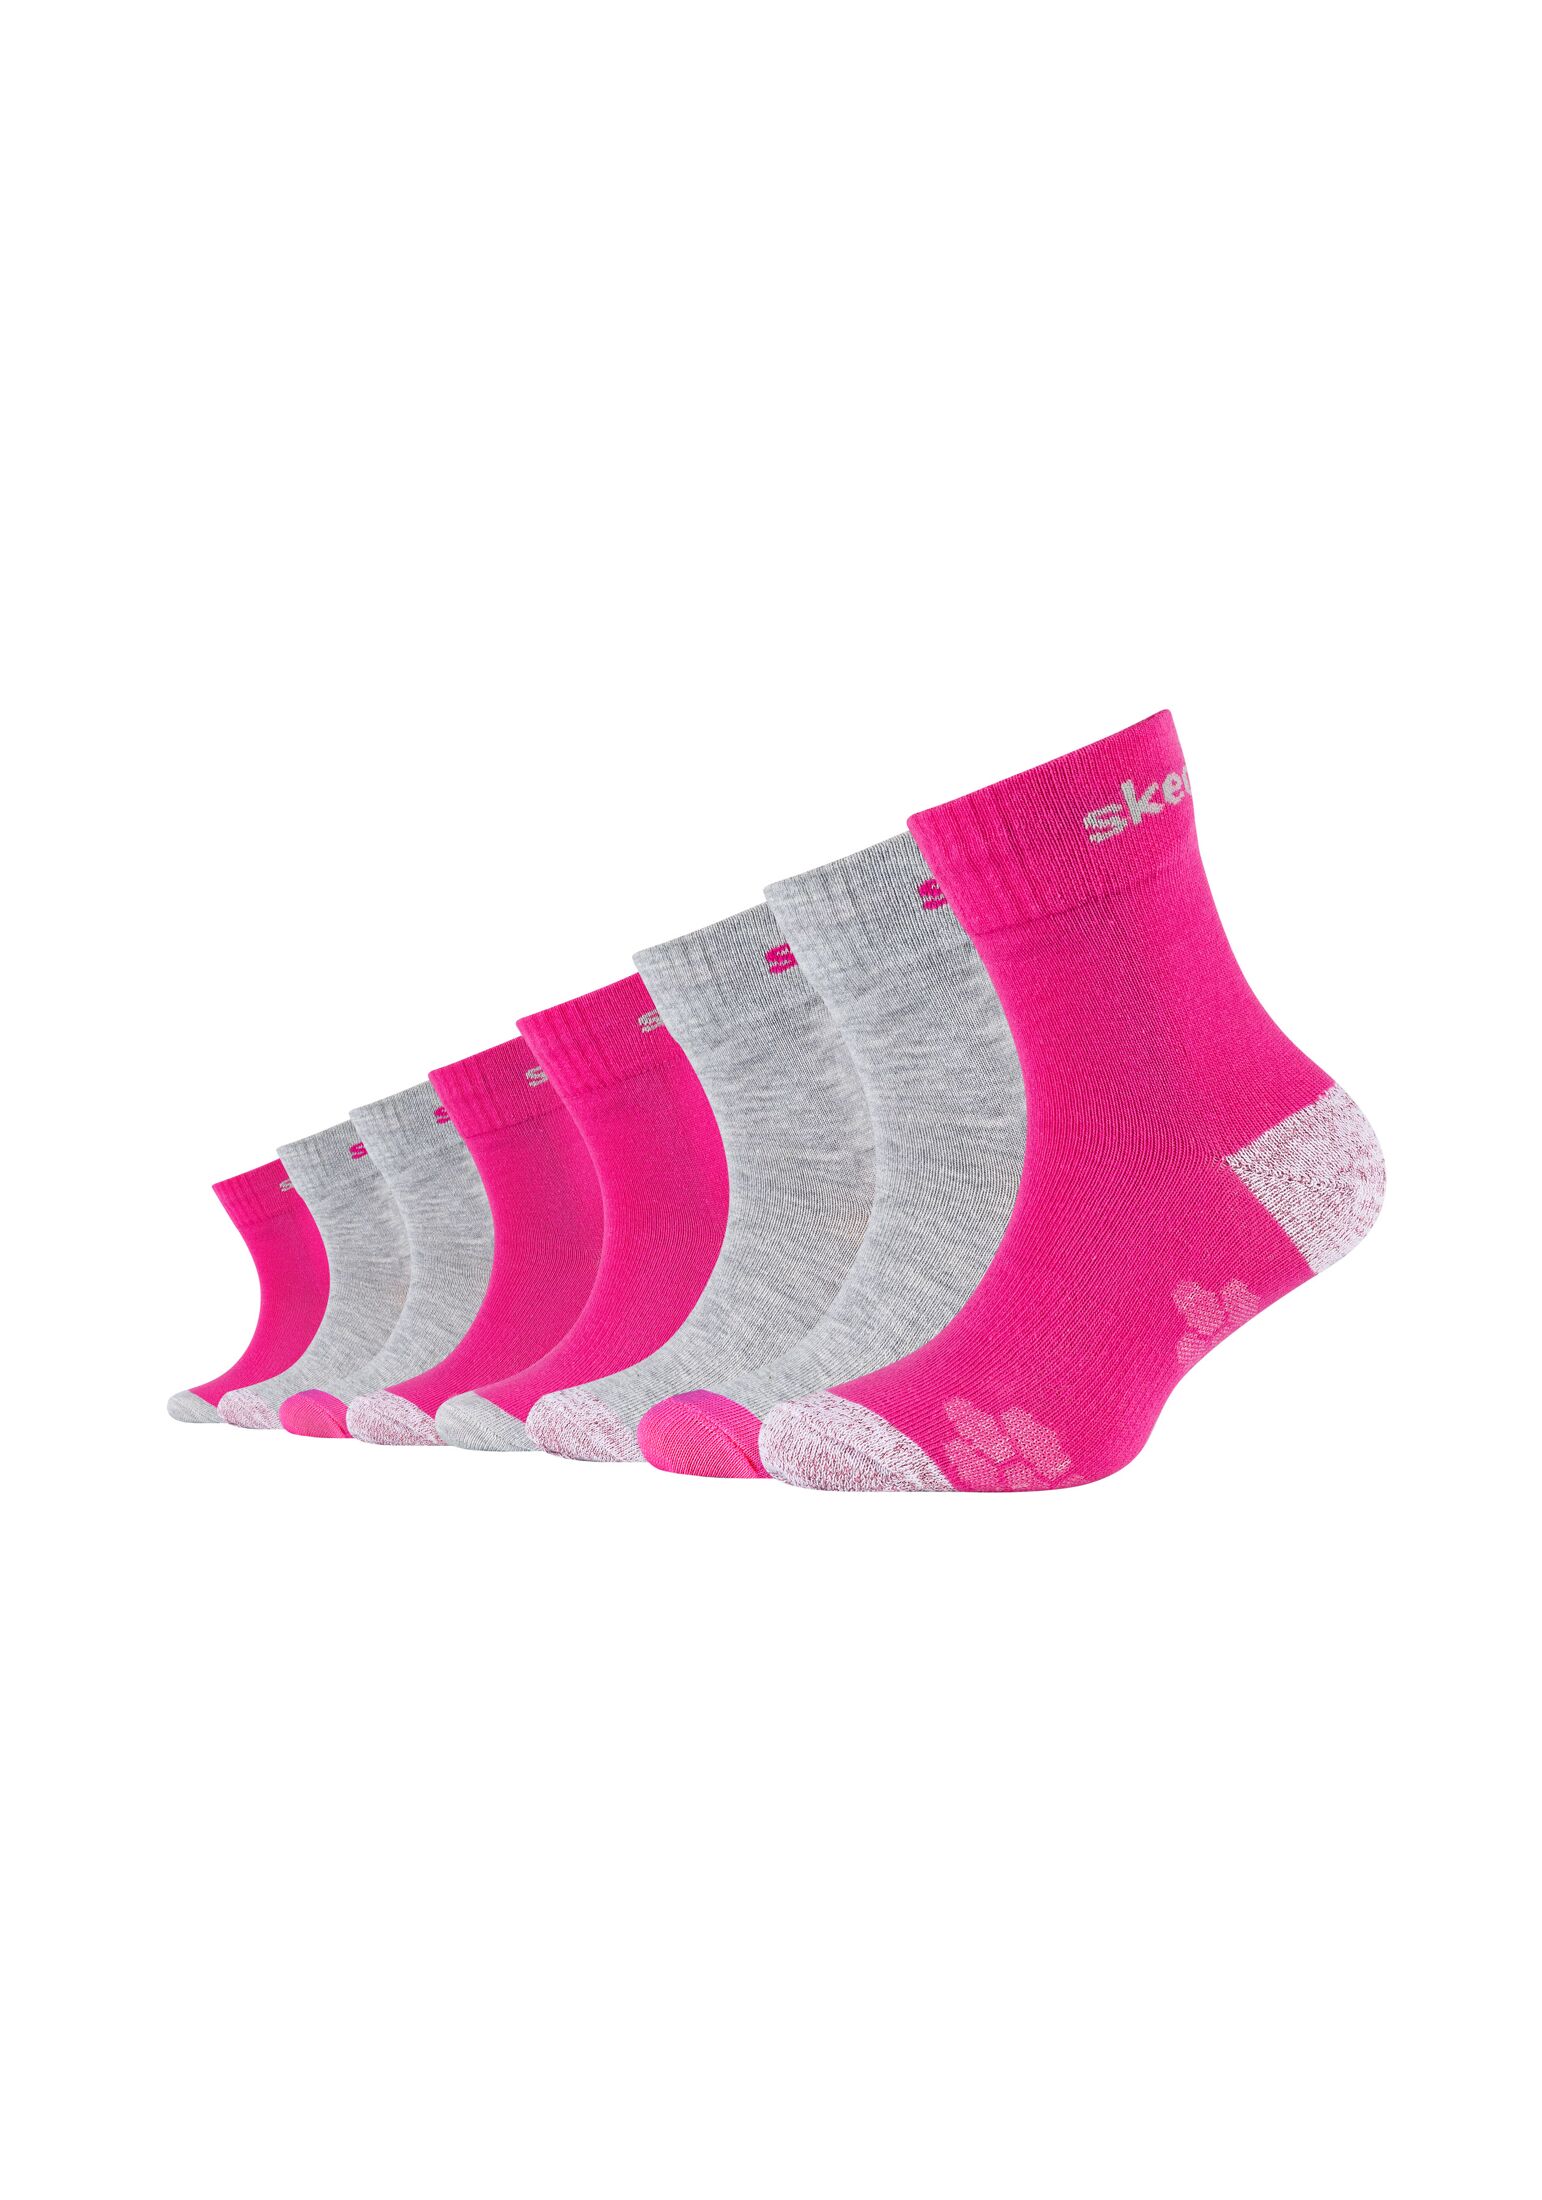 Носки Skechers 8 шт mesh ventilation, цвет shocking pink mix носки skechers sneaker 6 шт mesh ventilation цвет pink glow mix